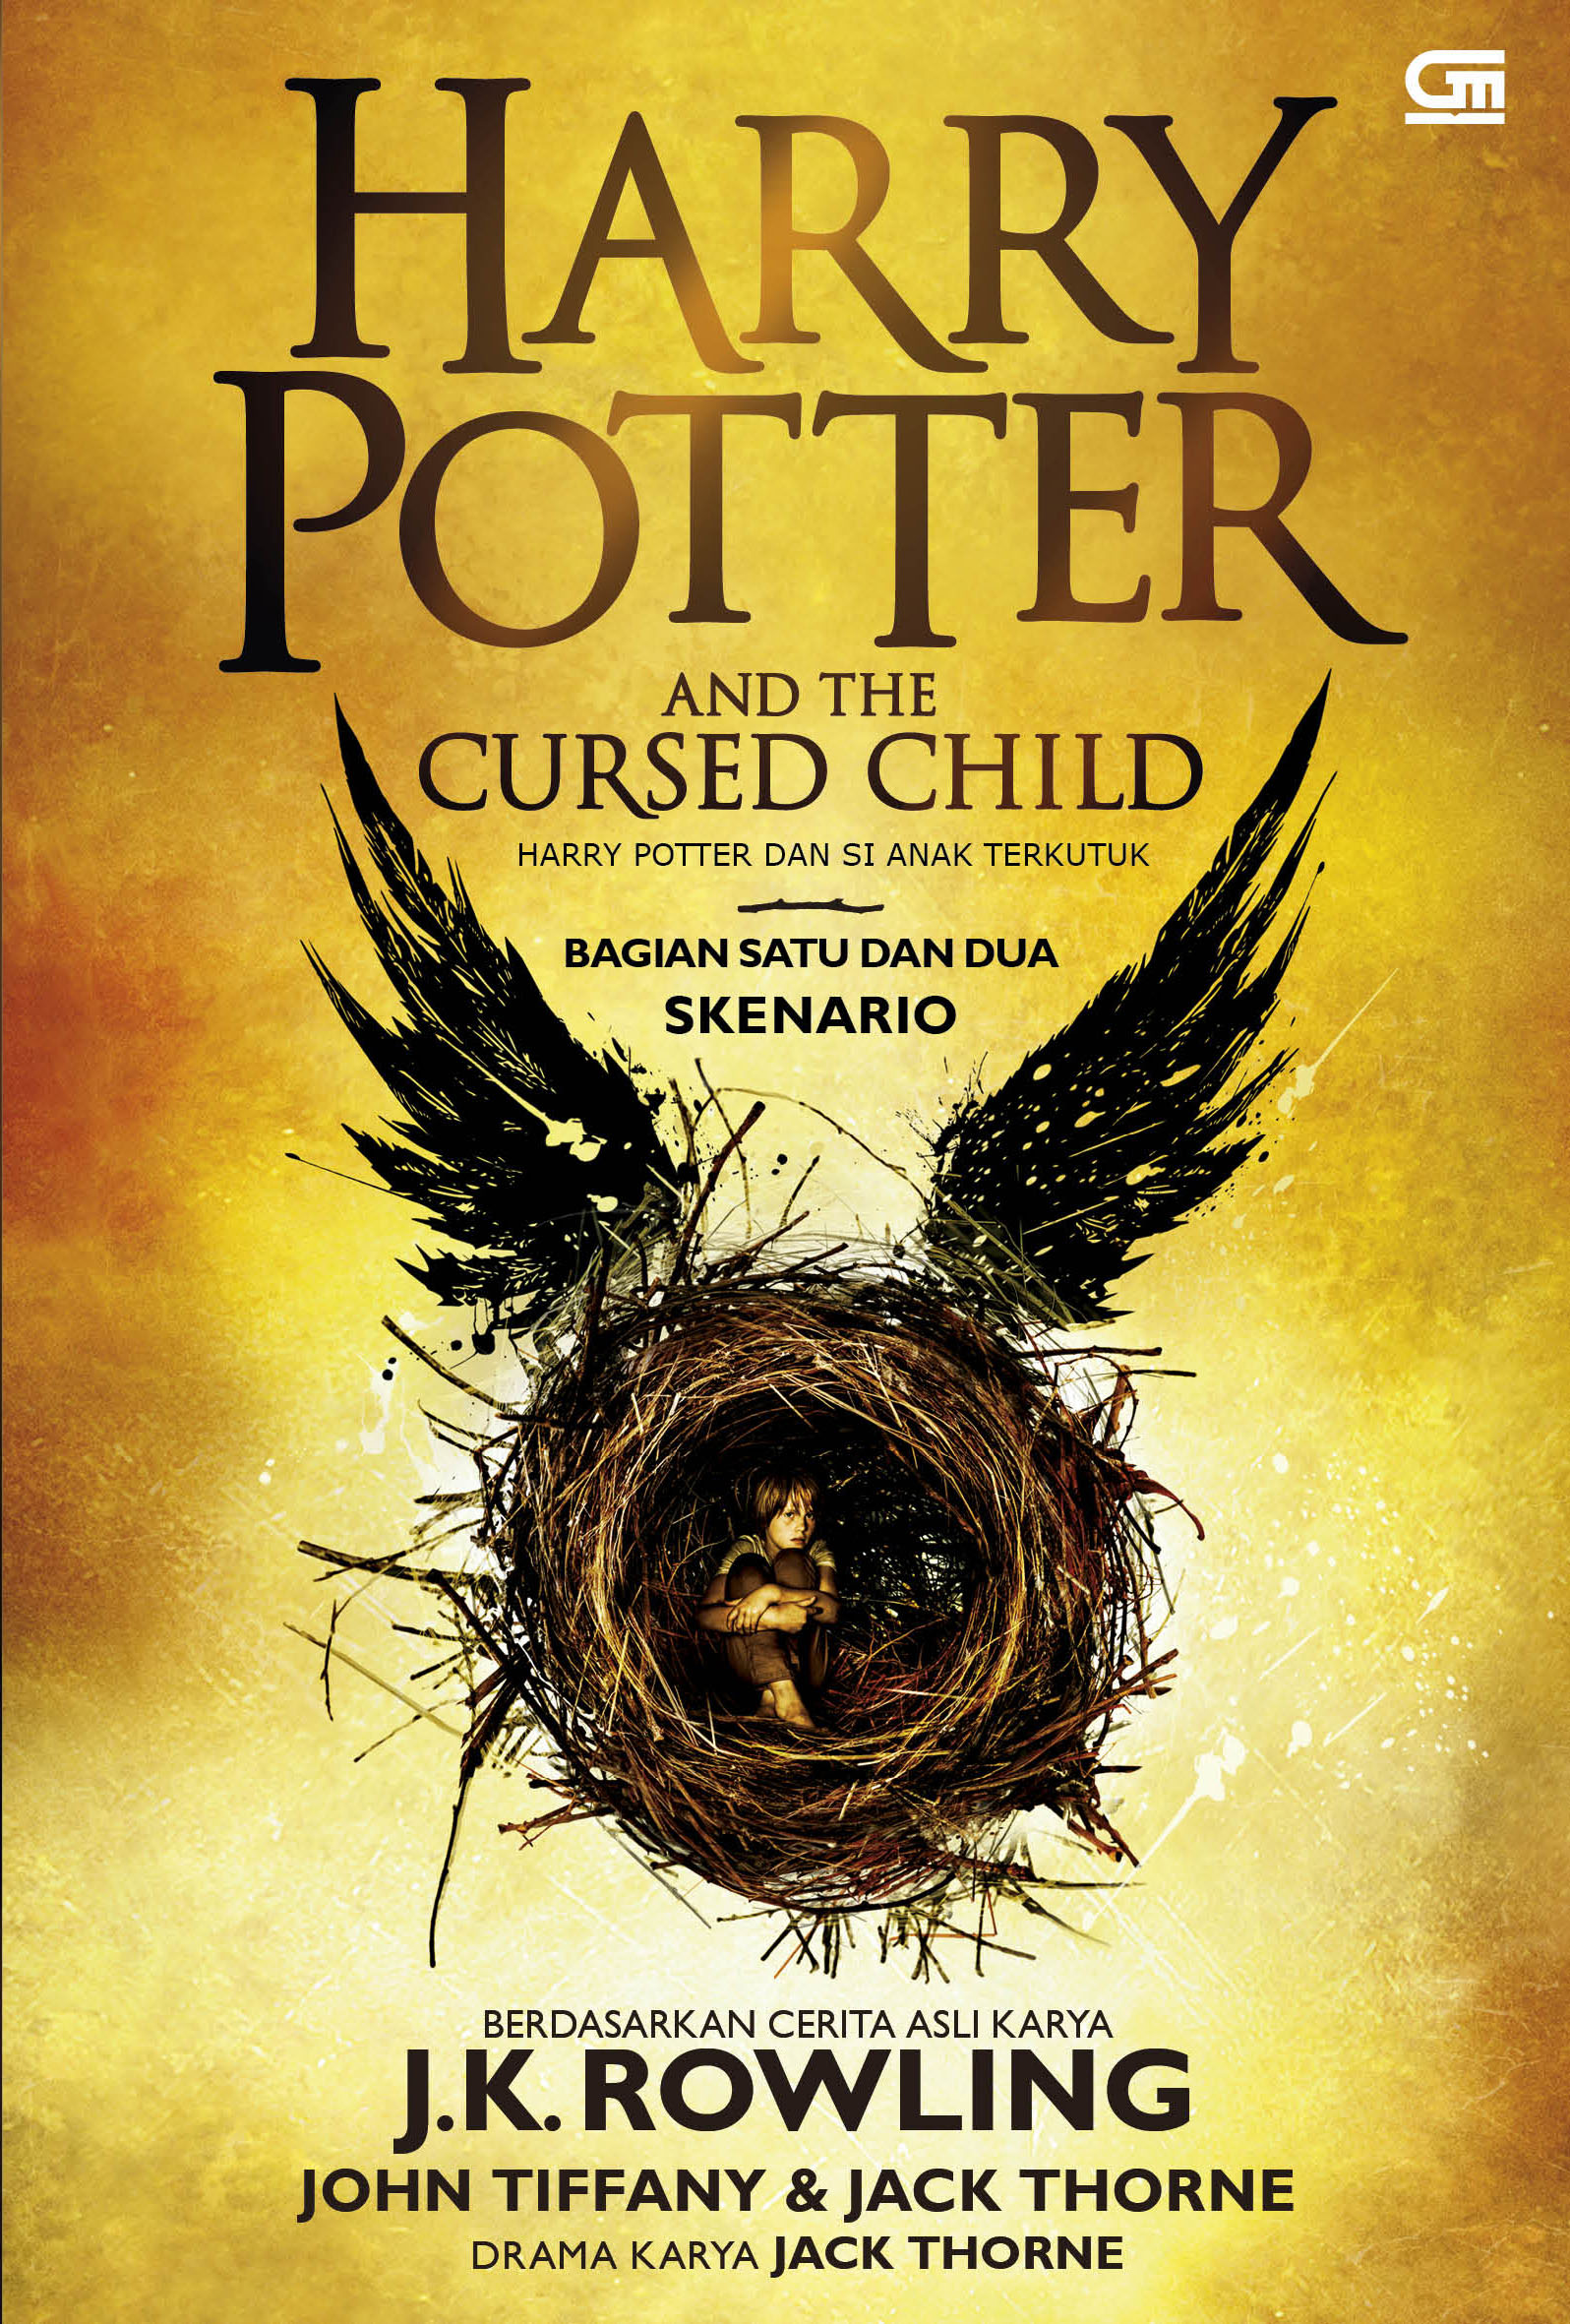 Harry Potter dan Si Anak Terkutuk (Harry Potter and The Cursed Child)